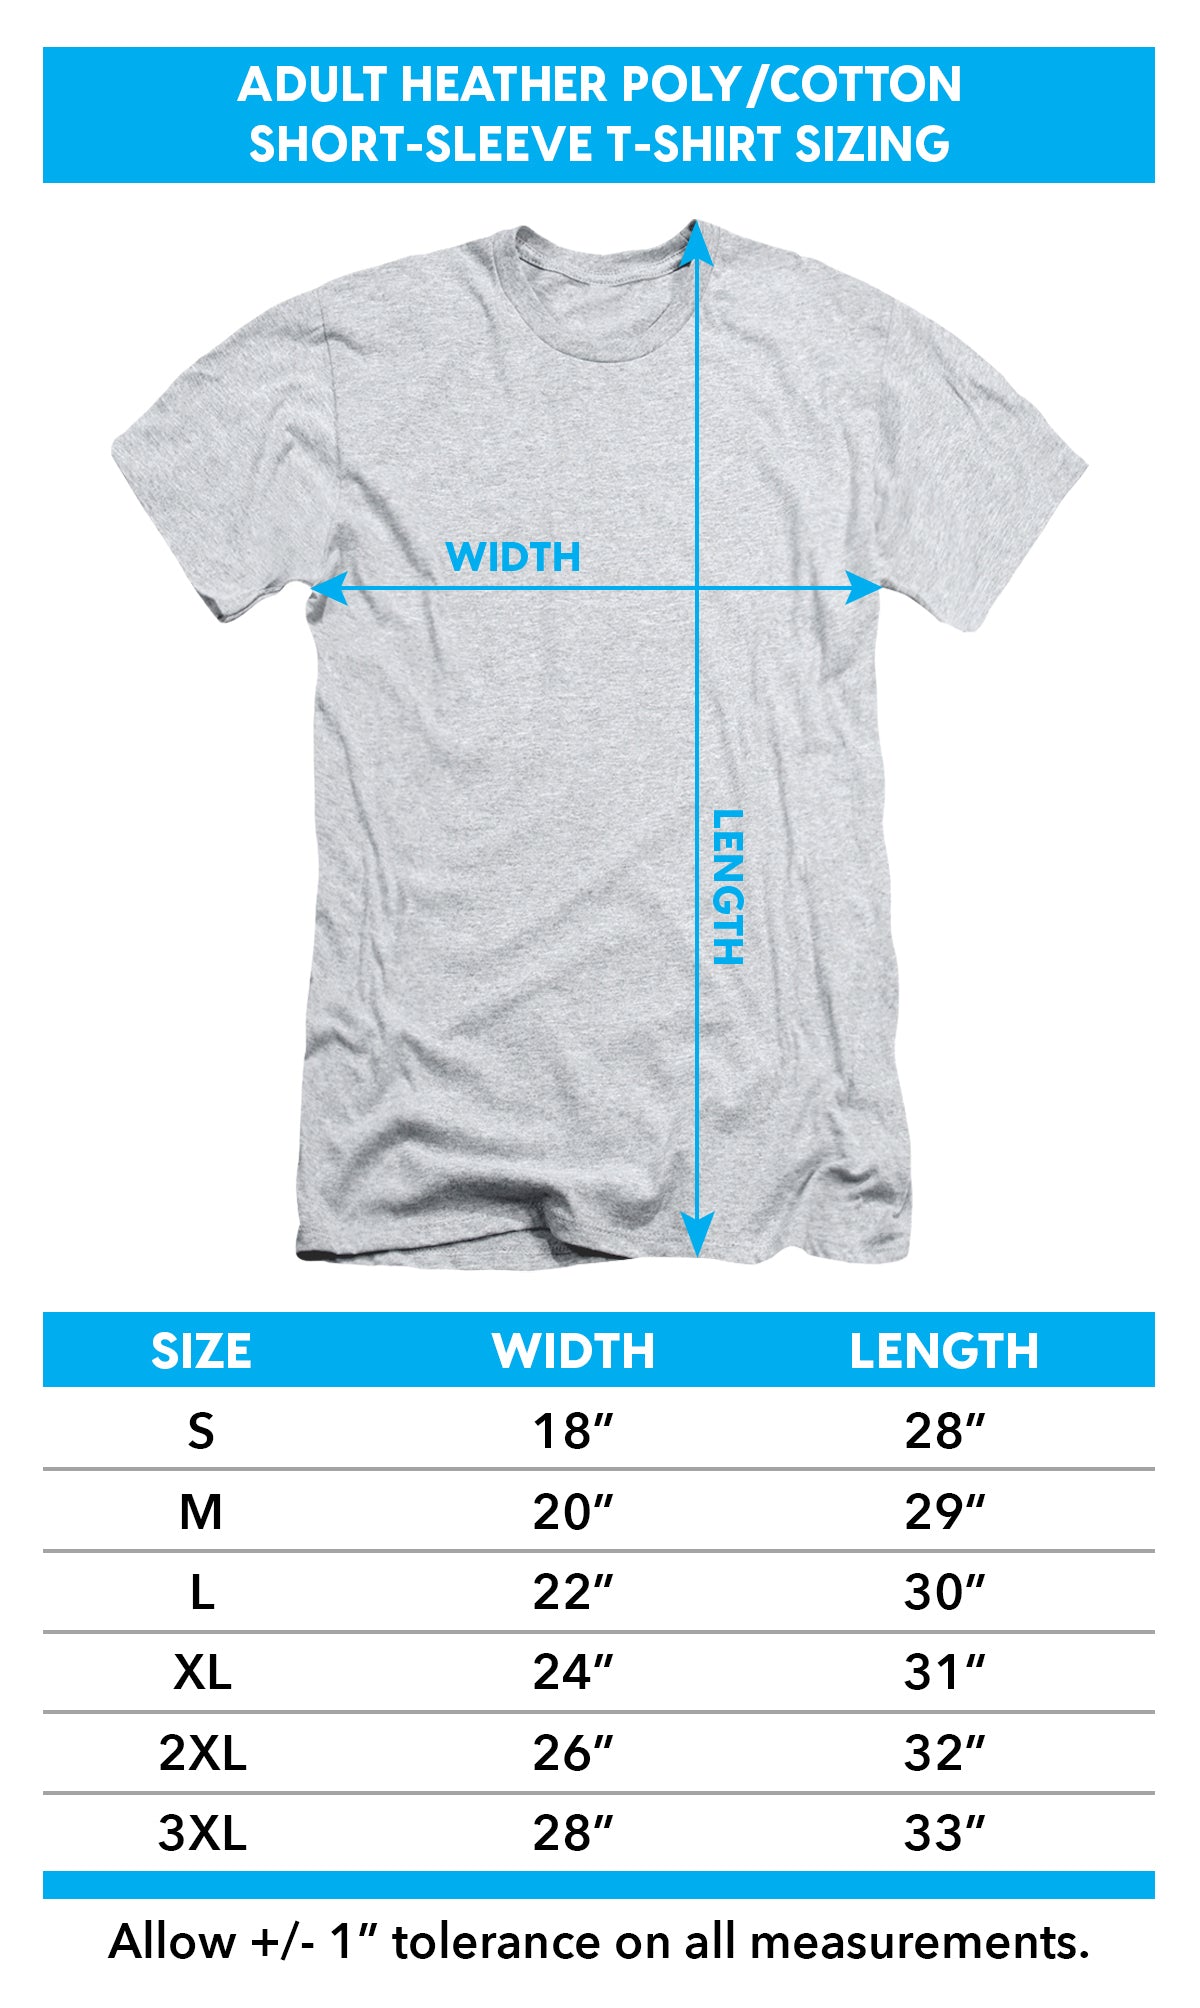 Star Trek Data Adult Size Heather Style T-Shirt.